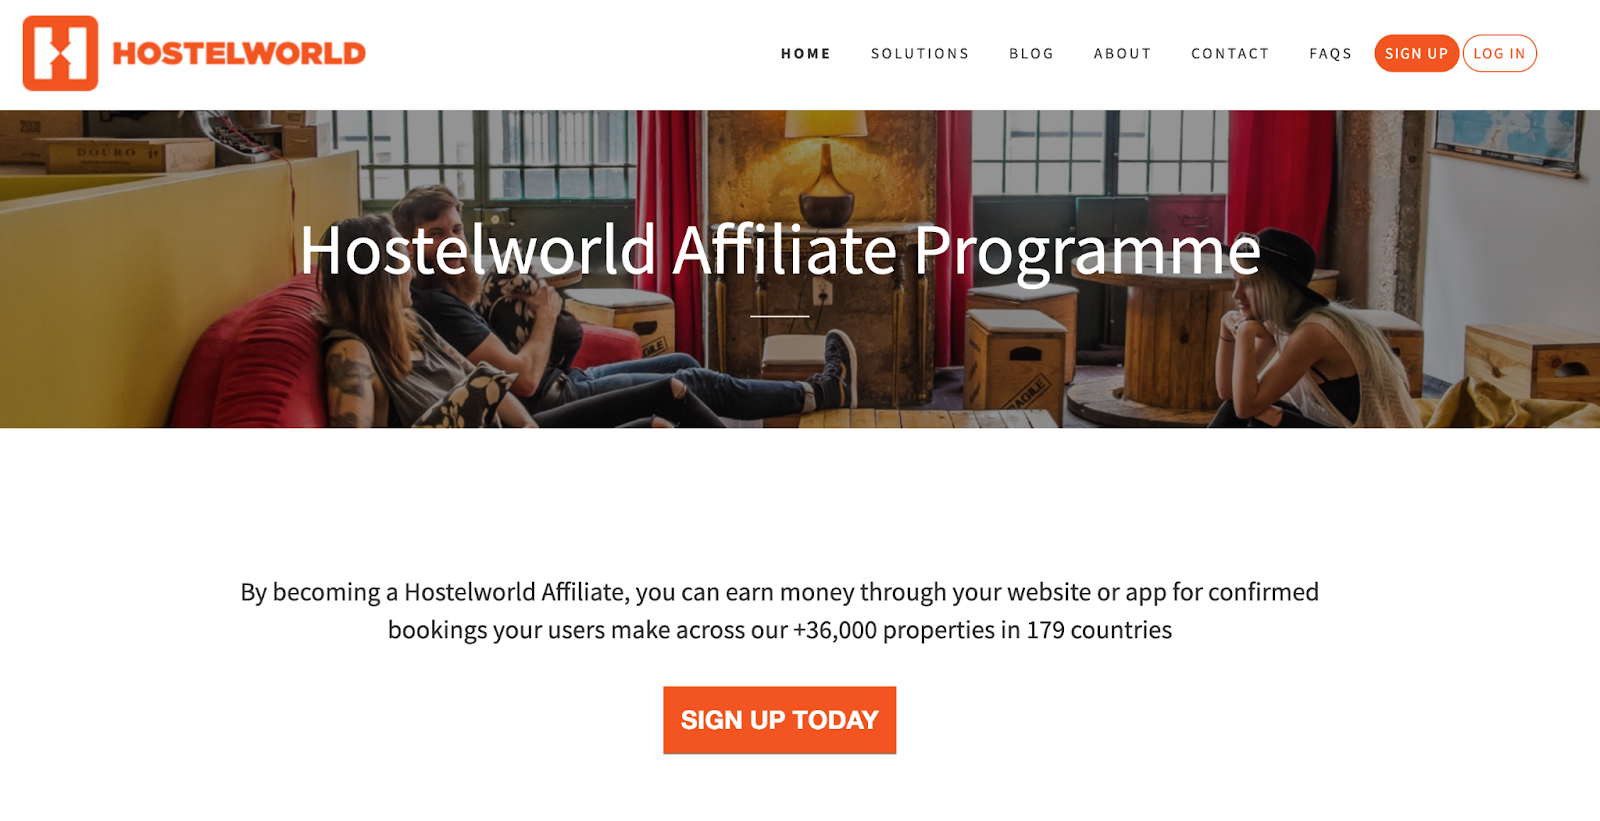 Hostelworld affiliate program page